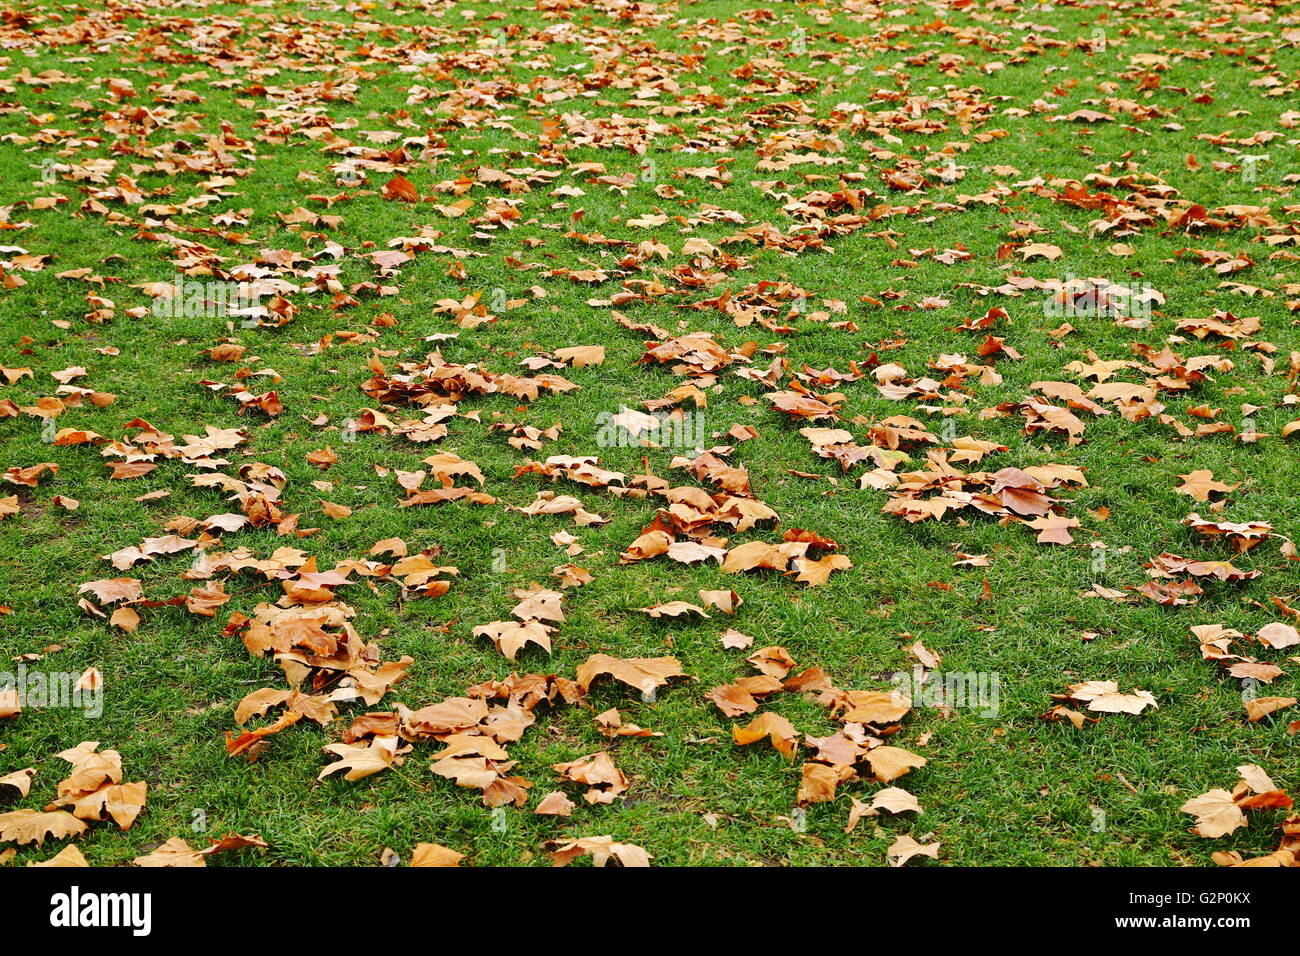 Autumn leaves settle on a lush green grass lawn at Salamanca Place in Hobart, Tasmania, Australia. Stock Photo